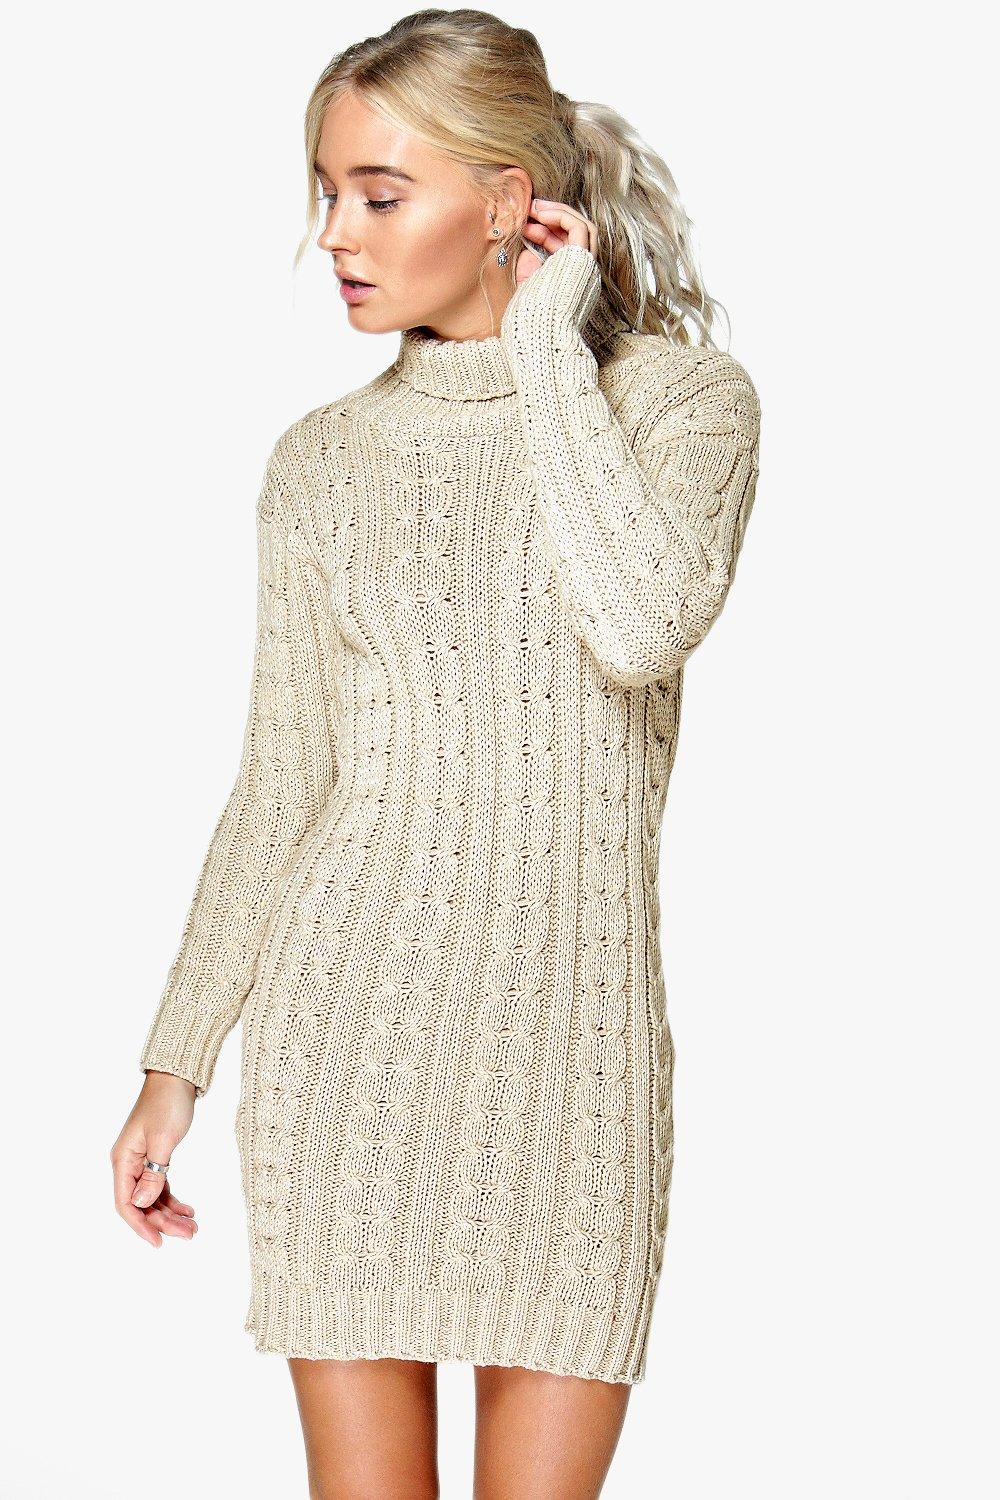 Boohoo Womens Lottie Cable Knit Jumper Dress | eBay